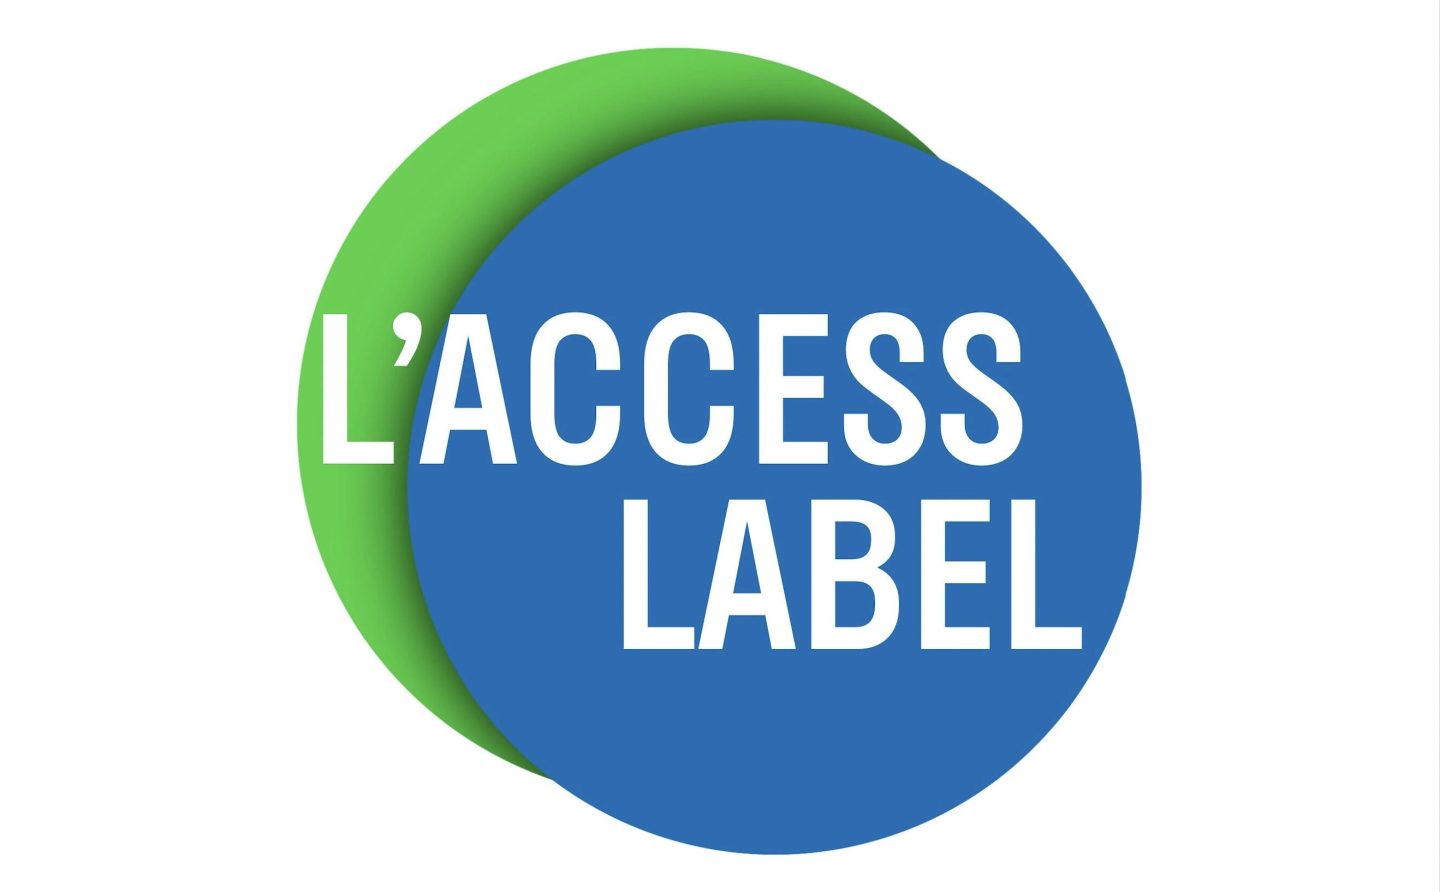 Access Label